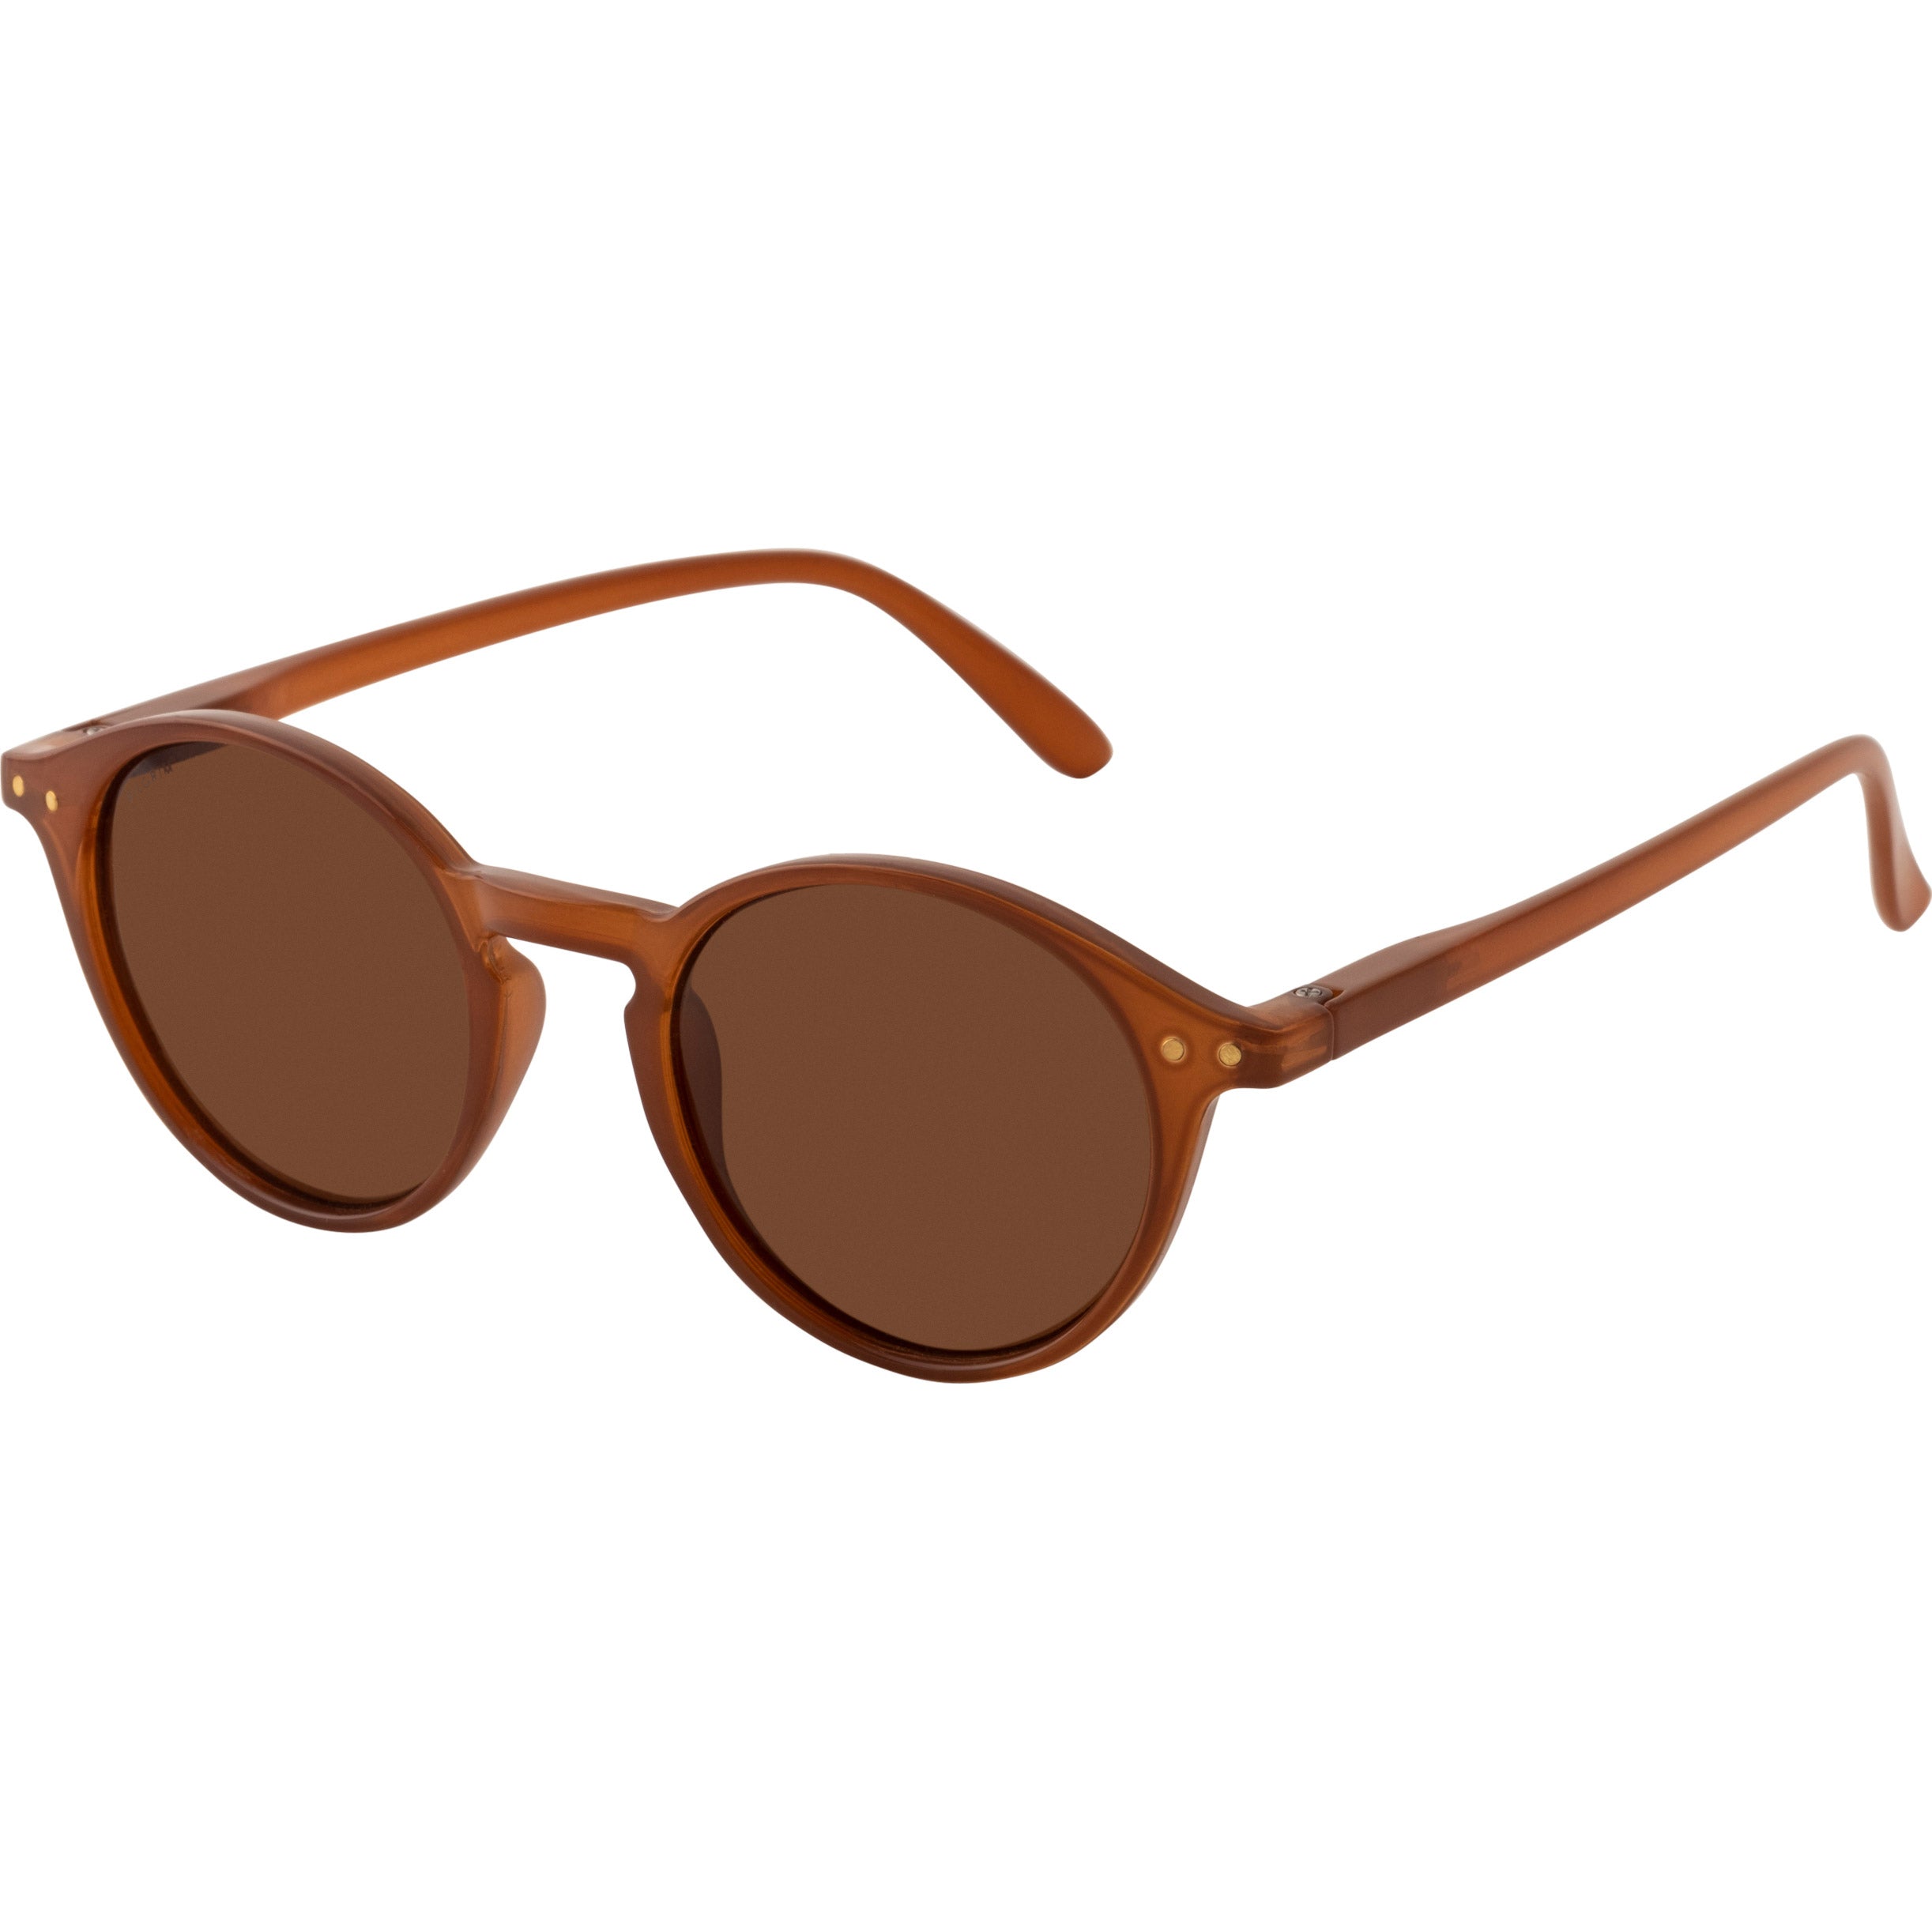 ROXANNE classic round shaped sunglasses, brown – Pilgrim